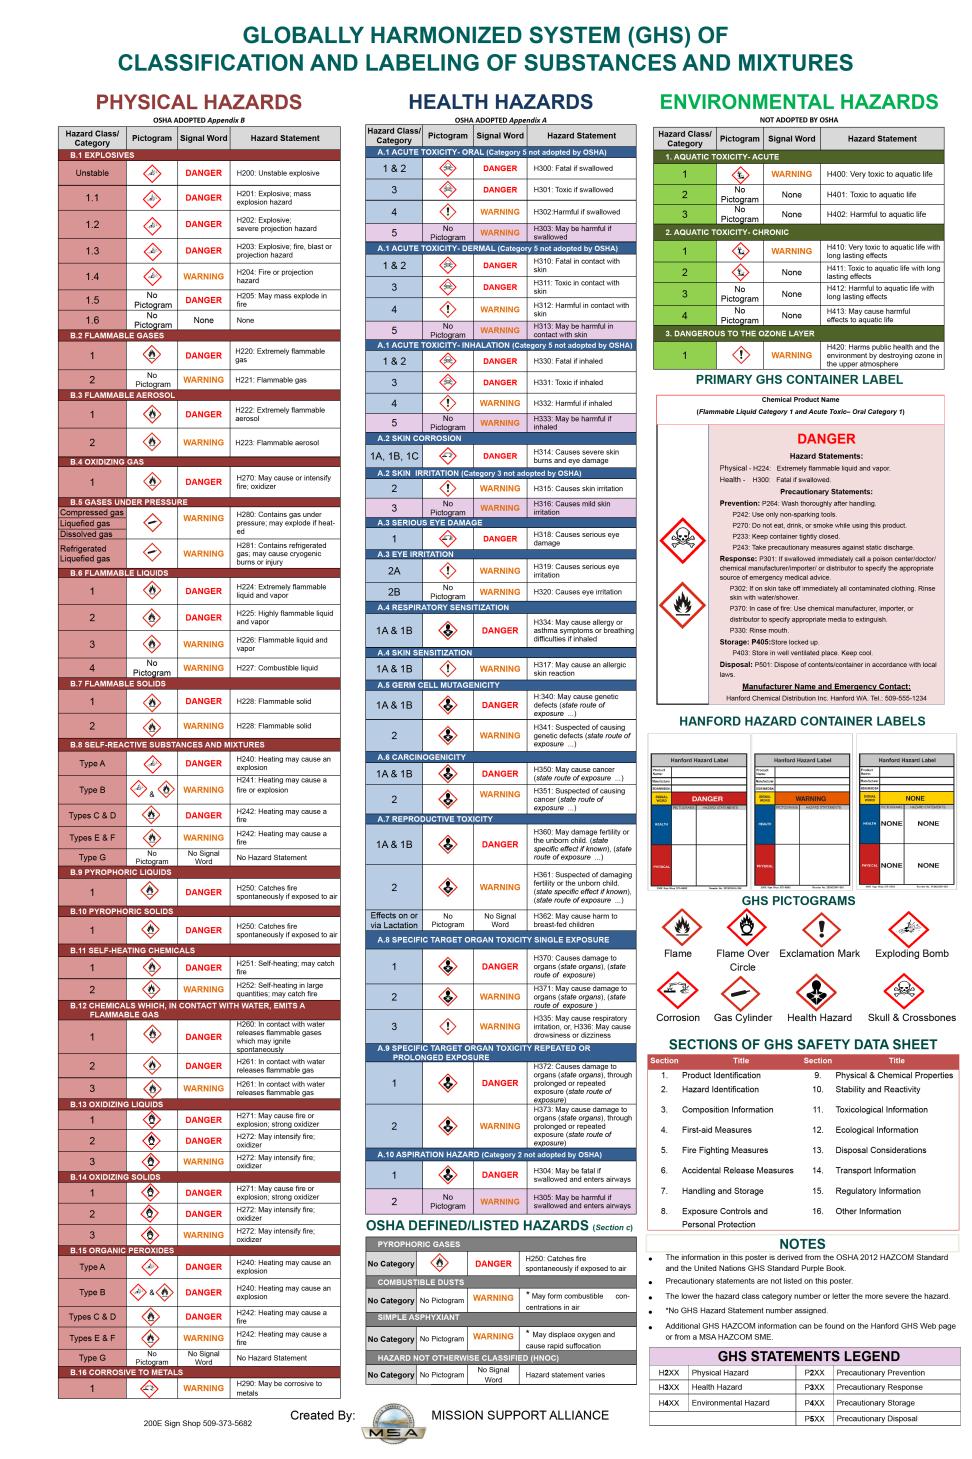 Safety Data Sheet (SDS) 3 classes of environmental hazards 1)